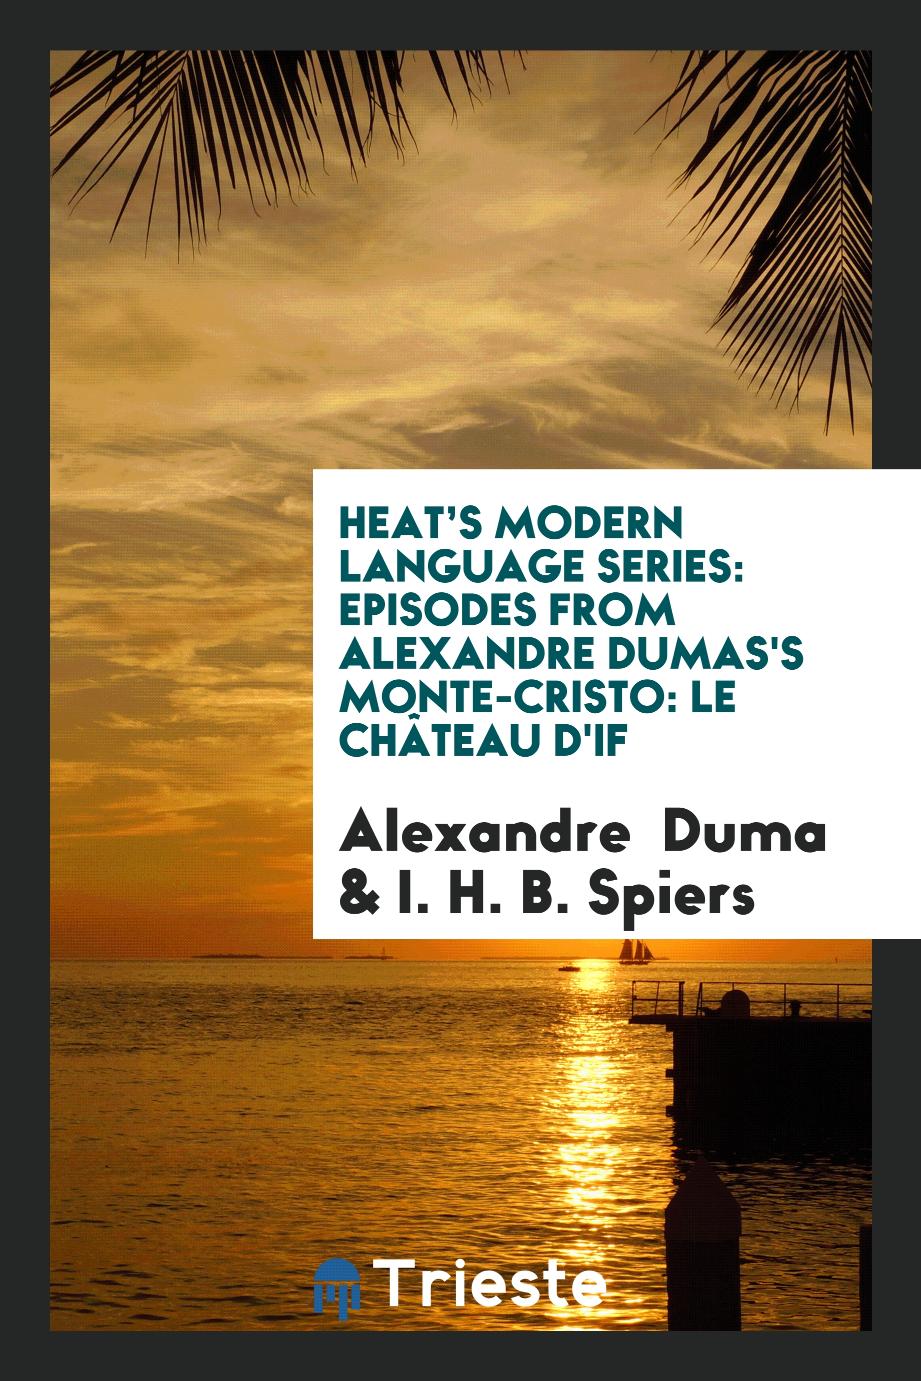 Heat’s Modern Language Series: Episodes from Alexandre Dumas's Monte-Cristo: Le Château D'if